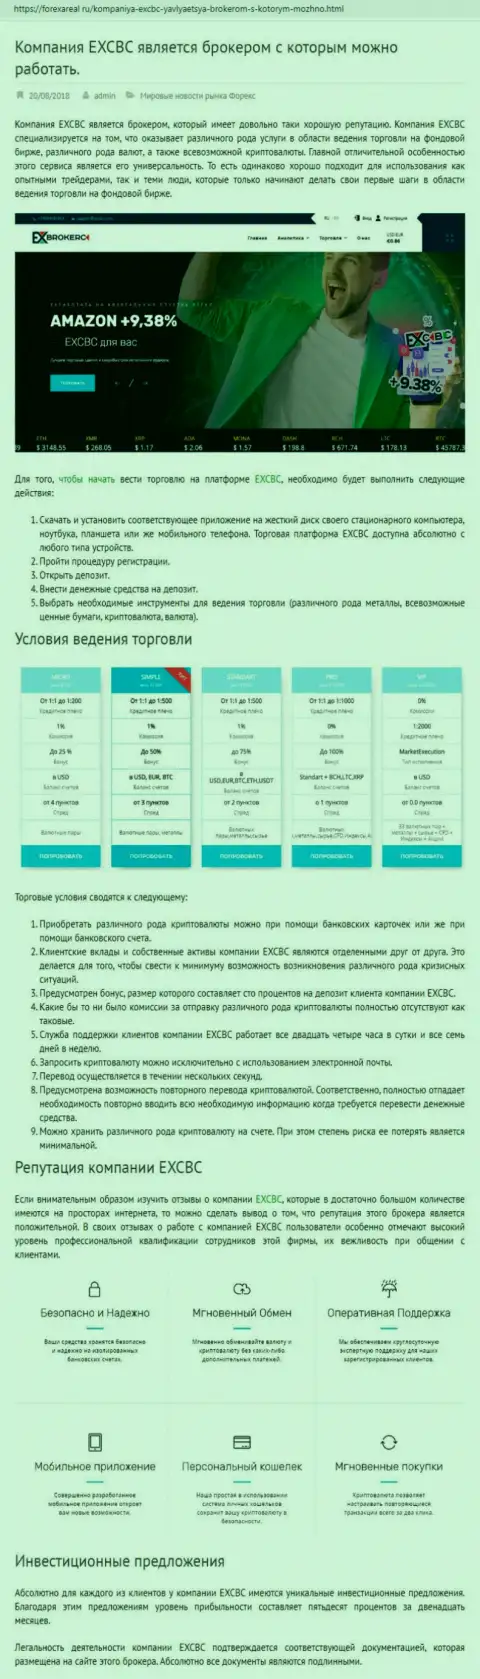 Онлайн-ресурс forexAreal Ru представил анализ ФОРЕКС дилинговой организации ЕХБрокерс